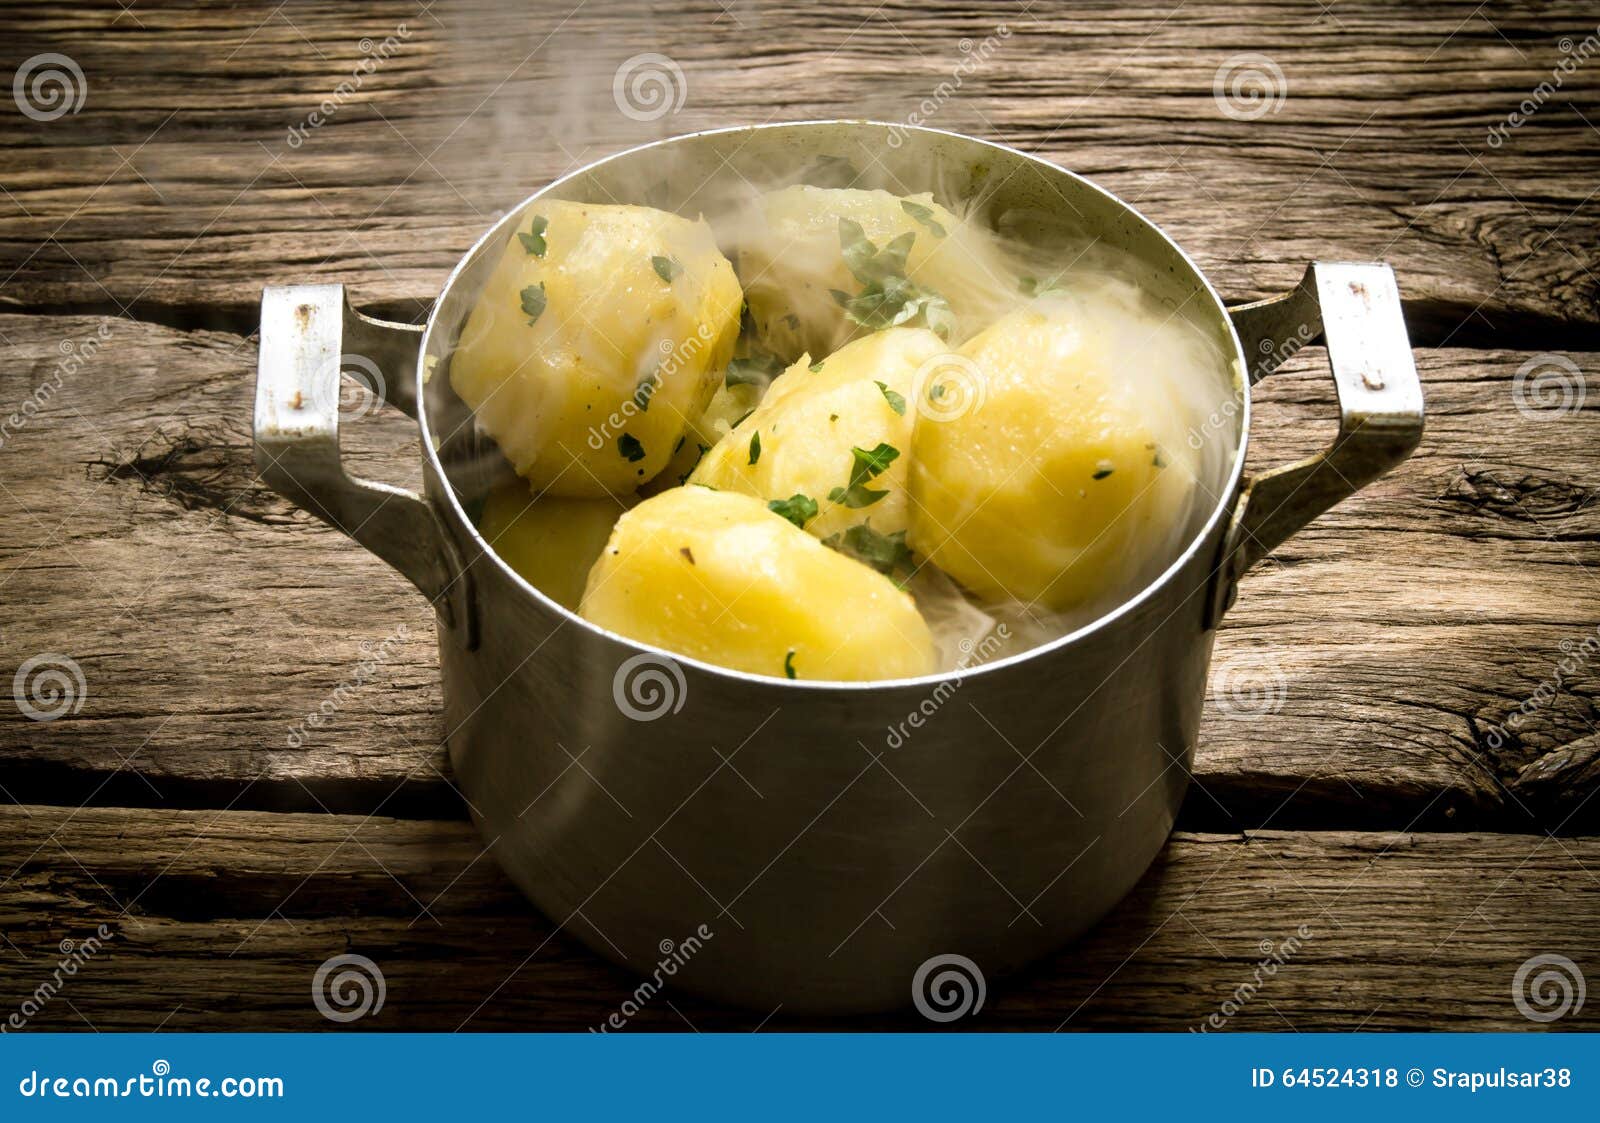 Can i steam potatoes фото 3